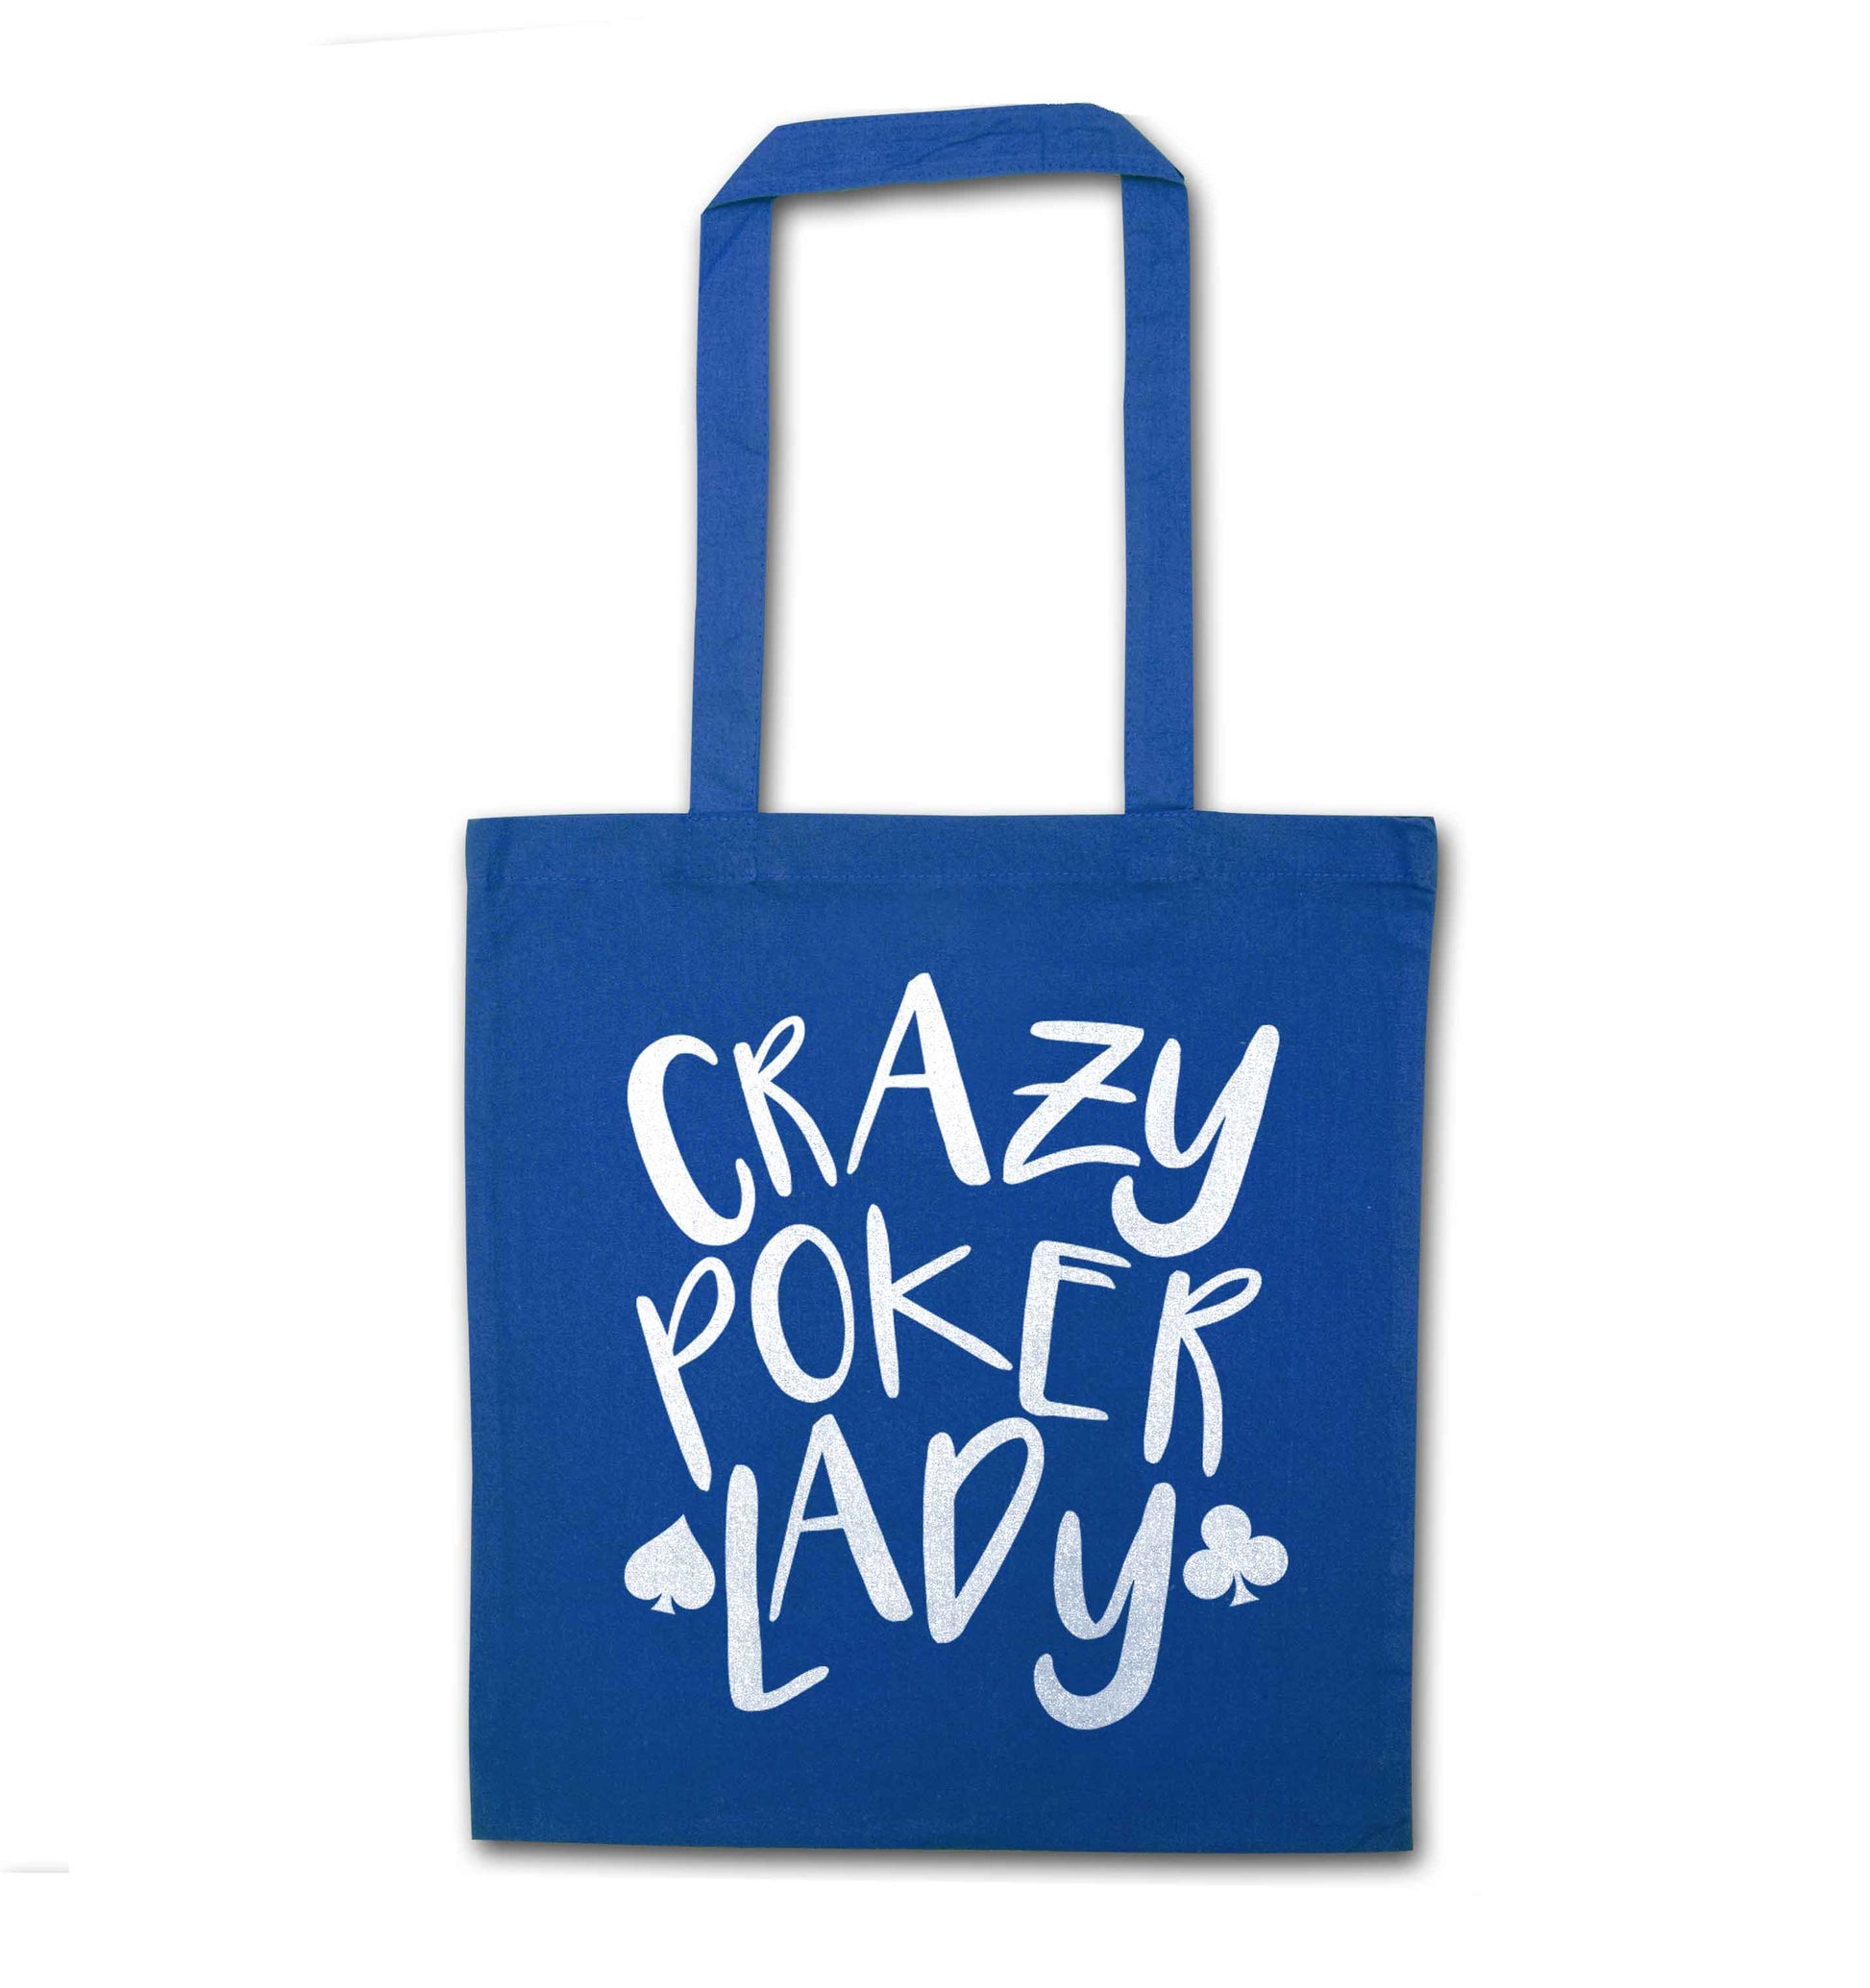 Crazy poker lady blue tote bag